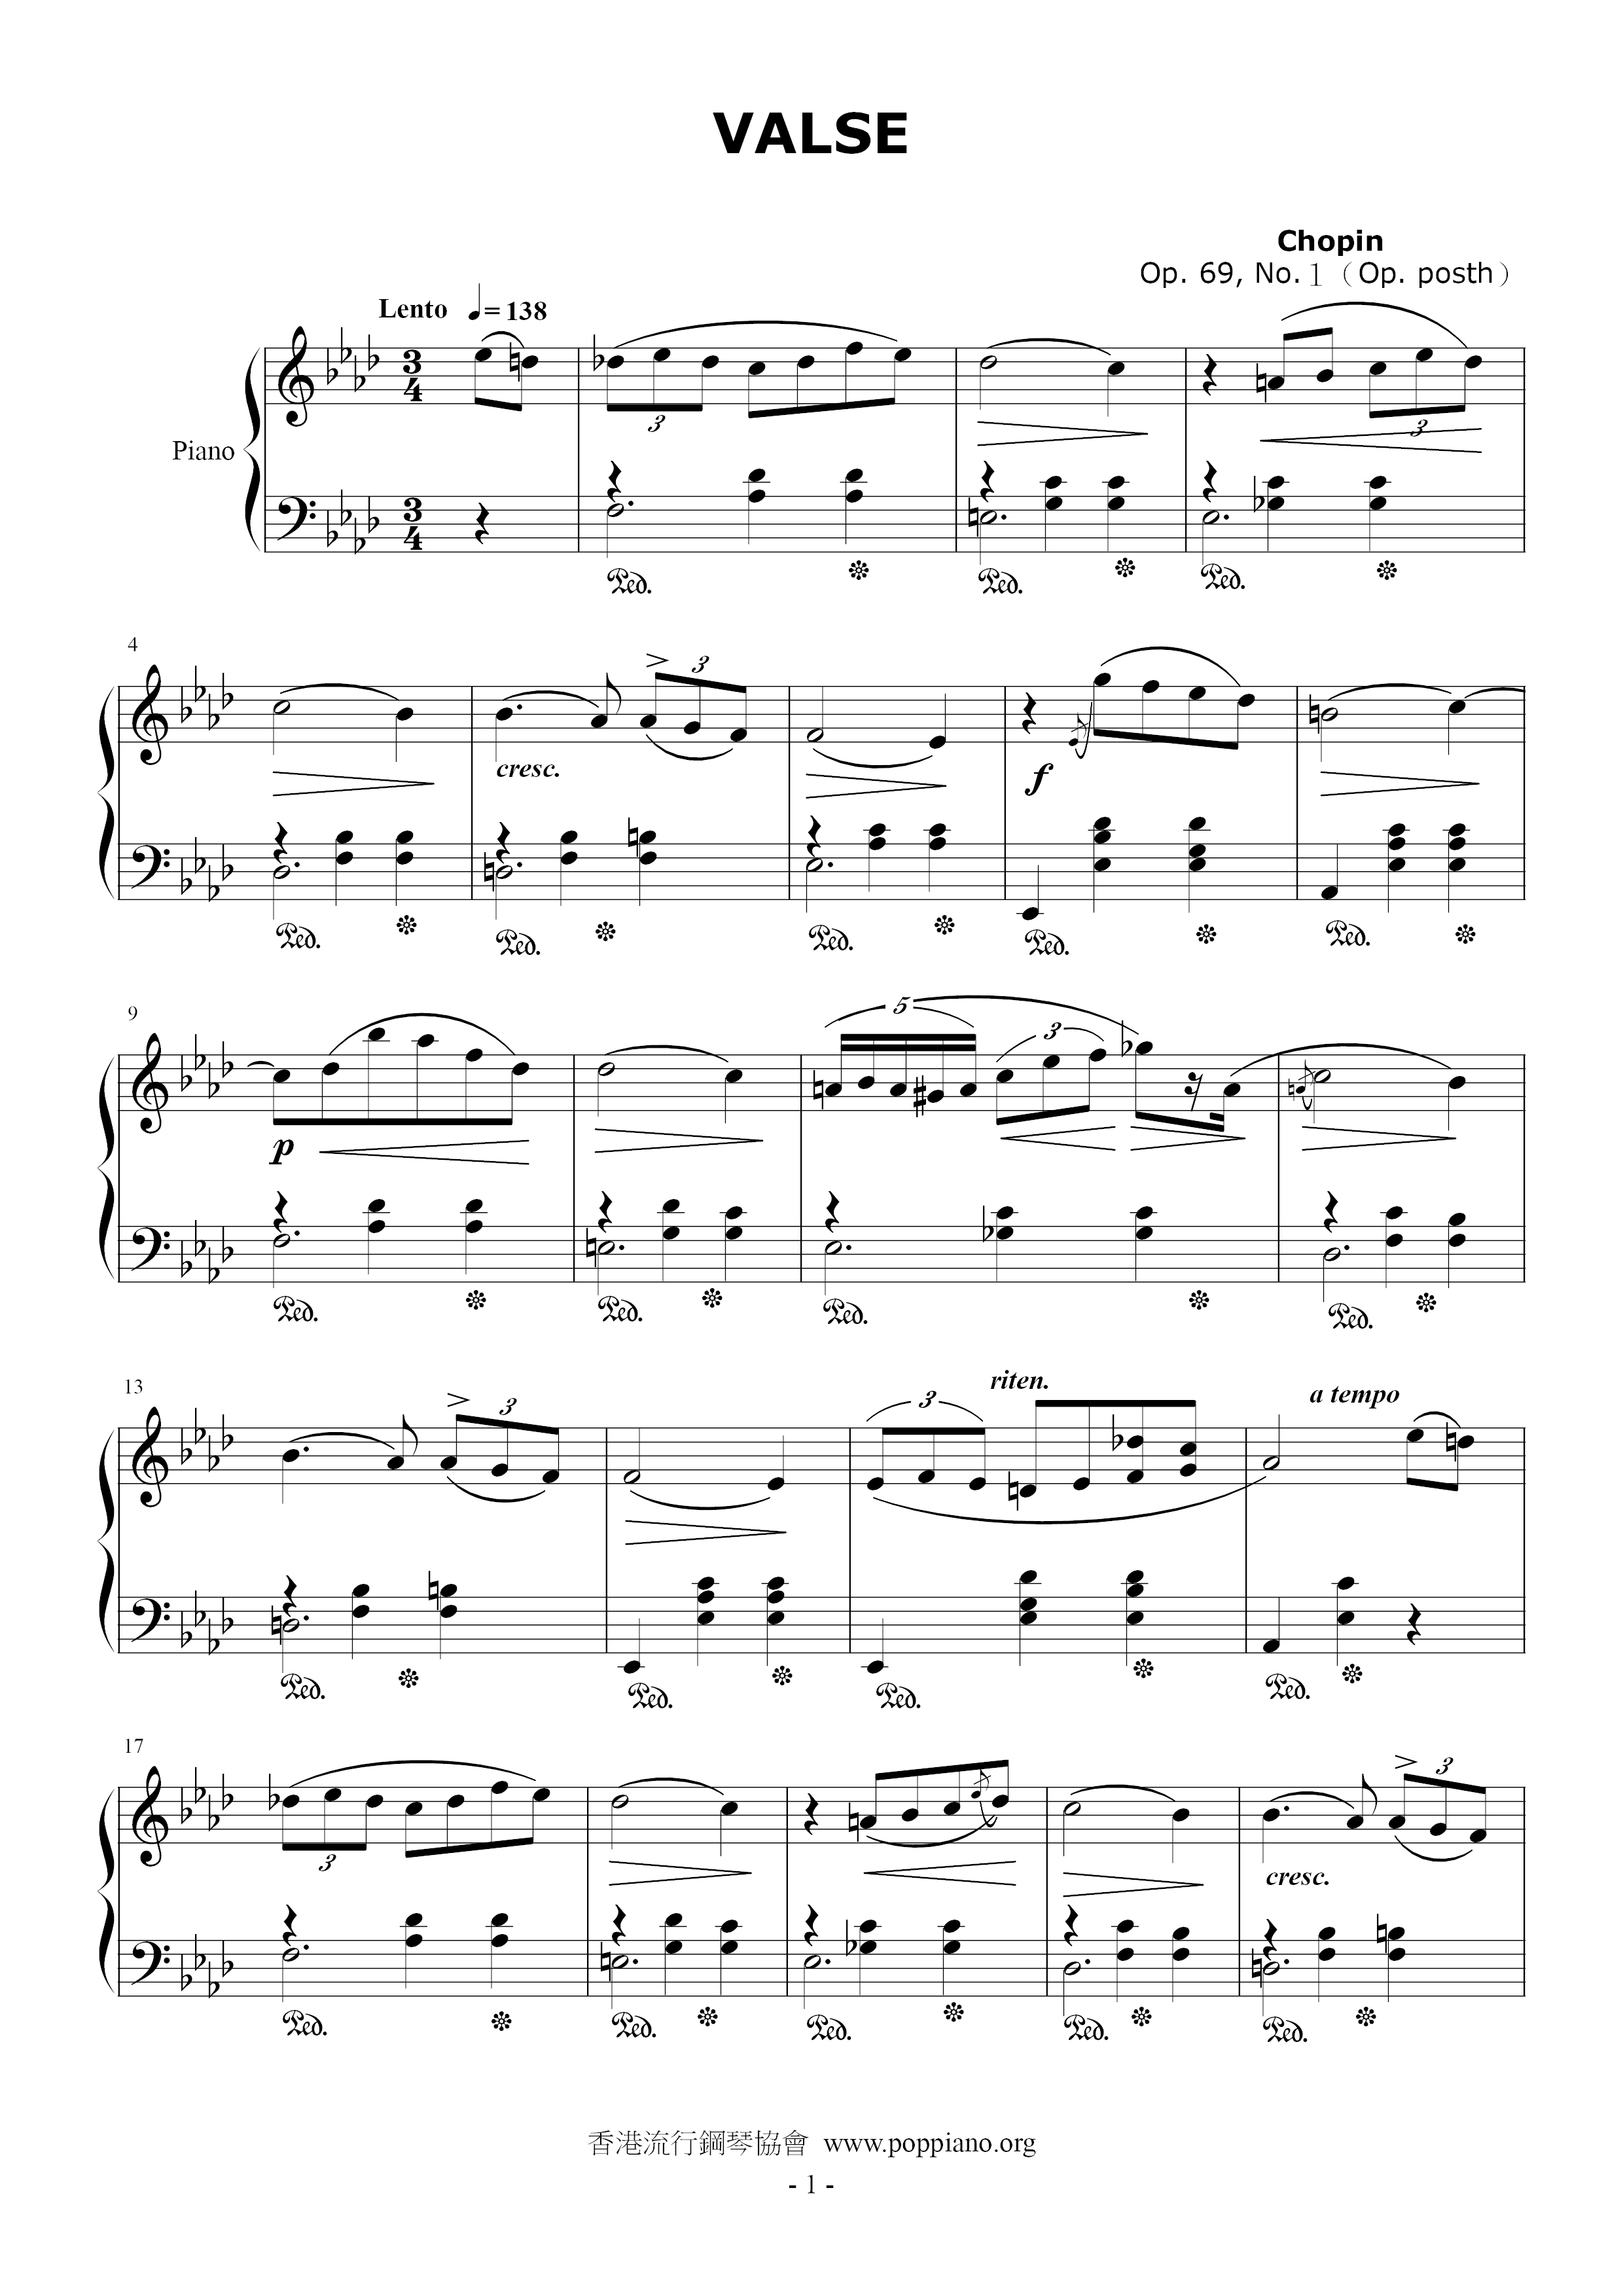 Waltzes, Op. 69, No. 1 In A-Flat Major琴譜